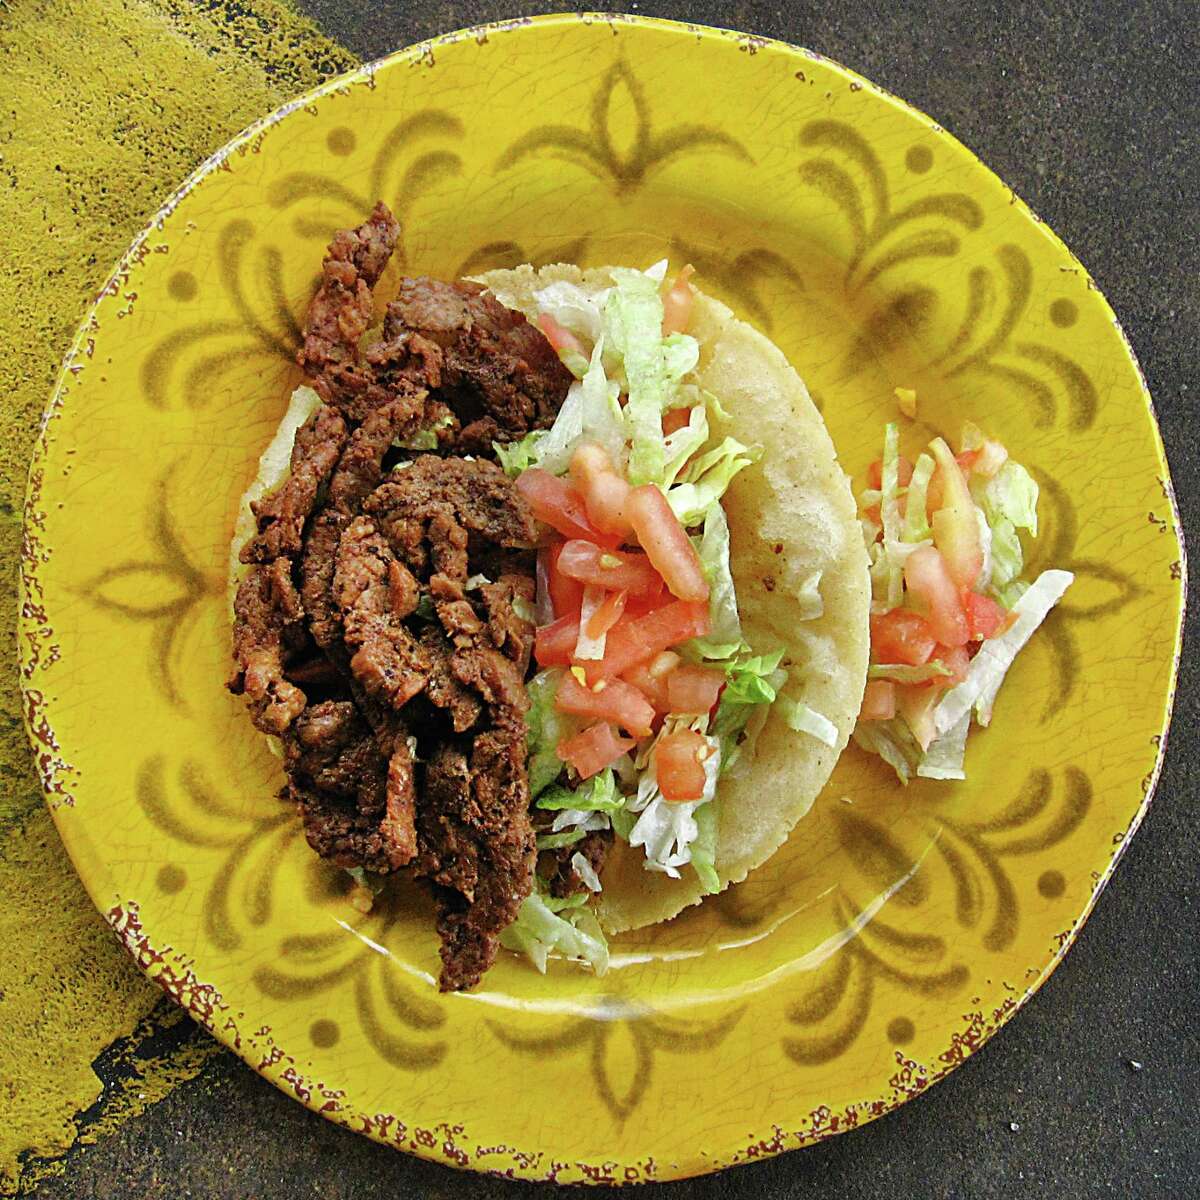 Taco of the Week: Beef fajita puffy taco from Oscar's Taco House.